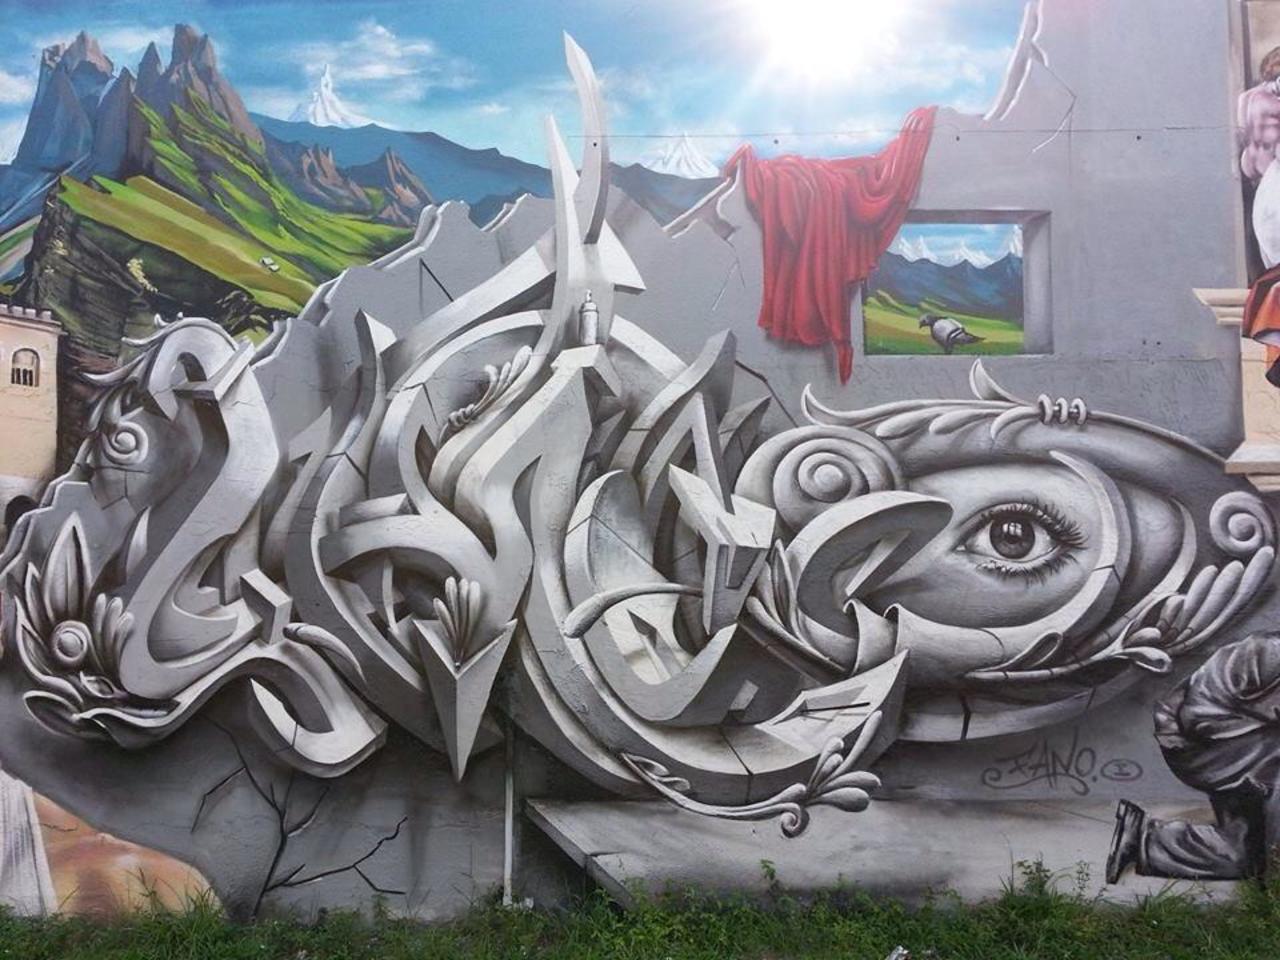 Artist 'Smog One' new Street Art wall located in Broward blvd, Florida, USA #art #mural #graffiti #streetart http://t.co/NxP1o2NuNL